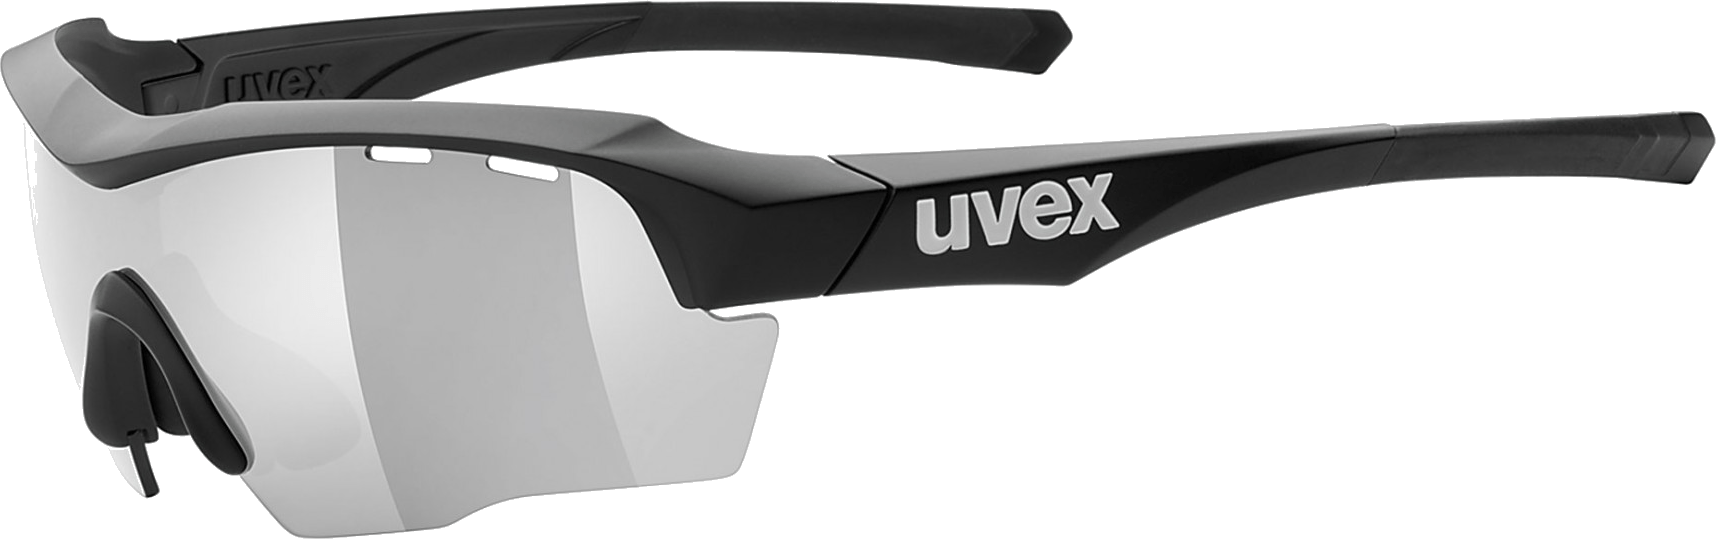 Uvex Sport Sunglasses Png Image PNG Image